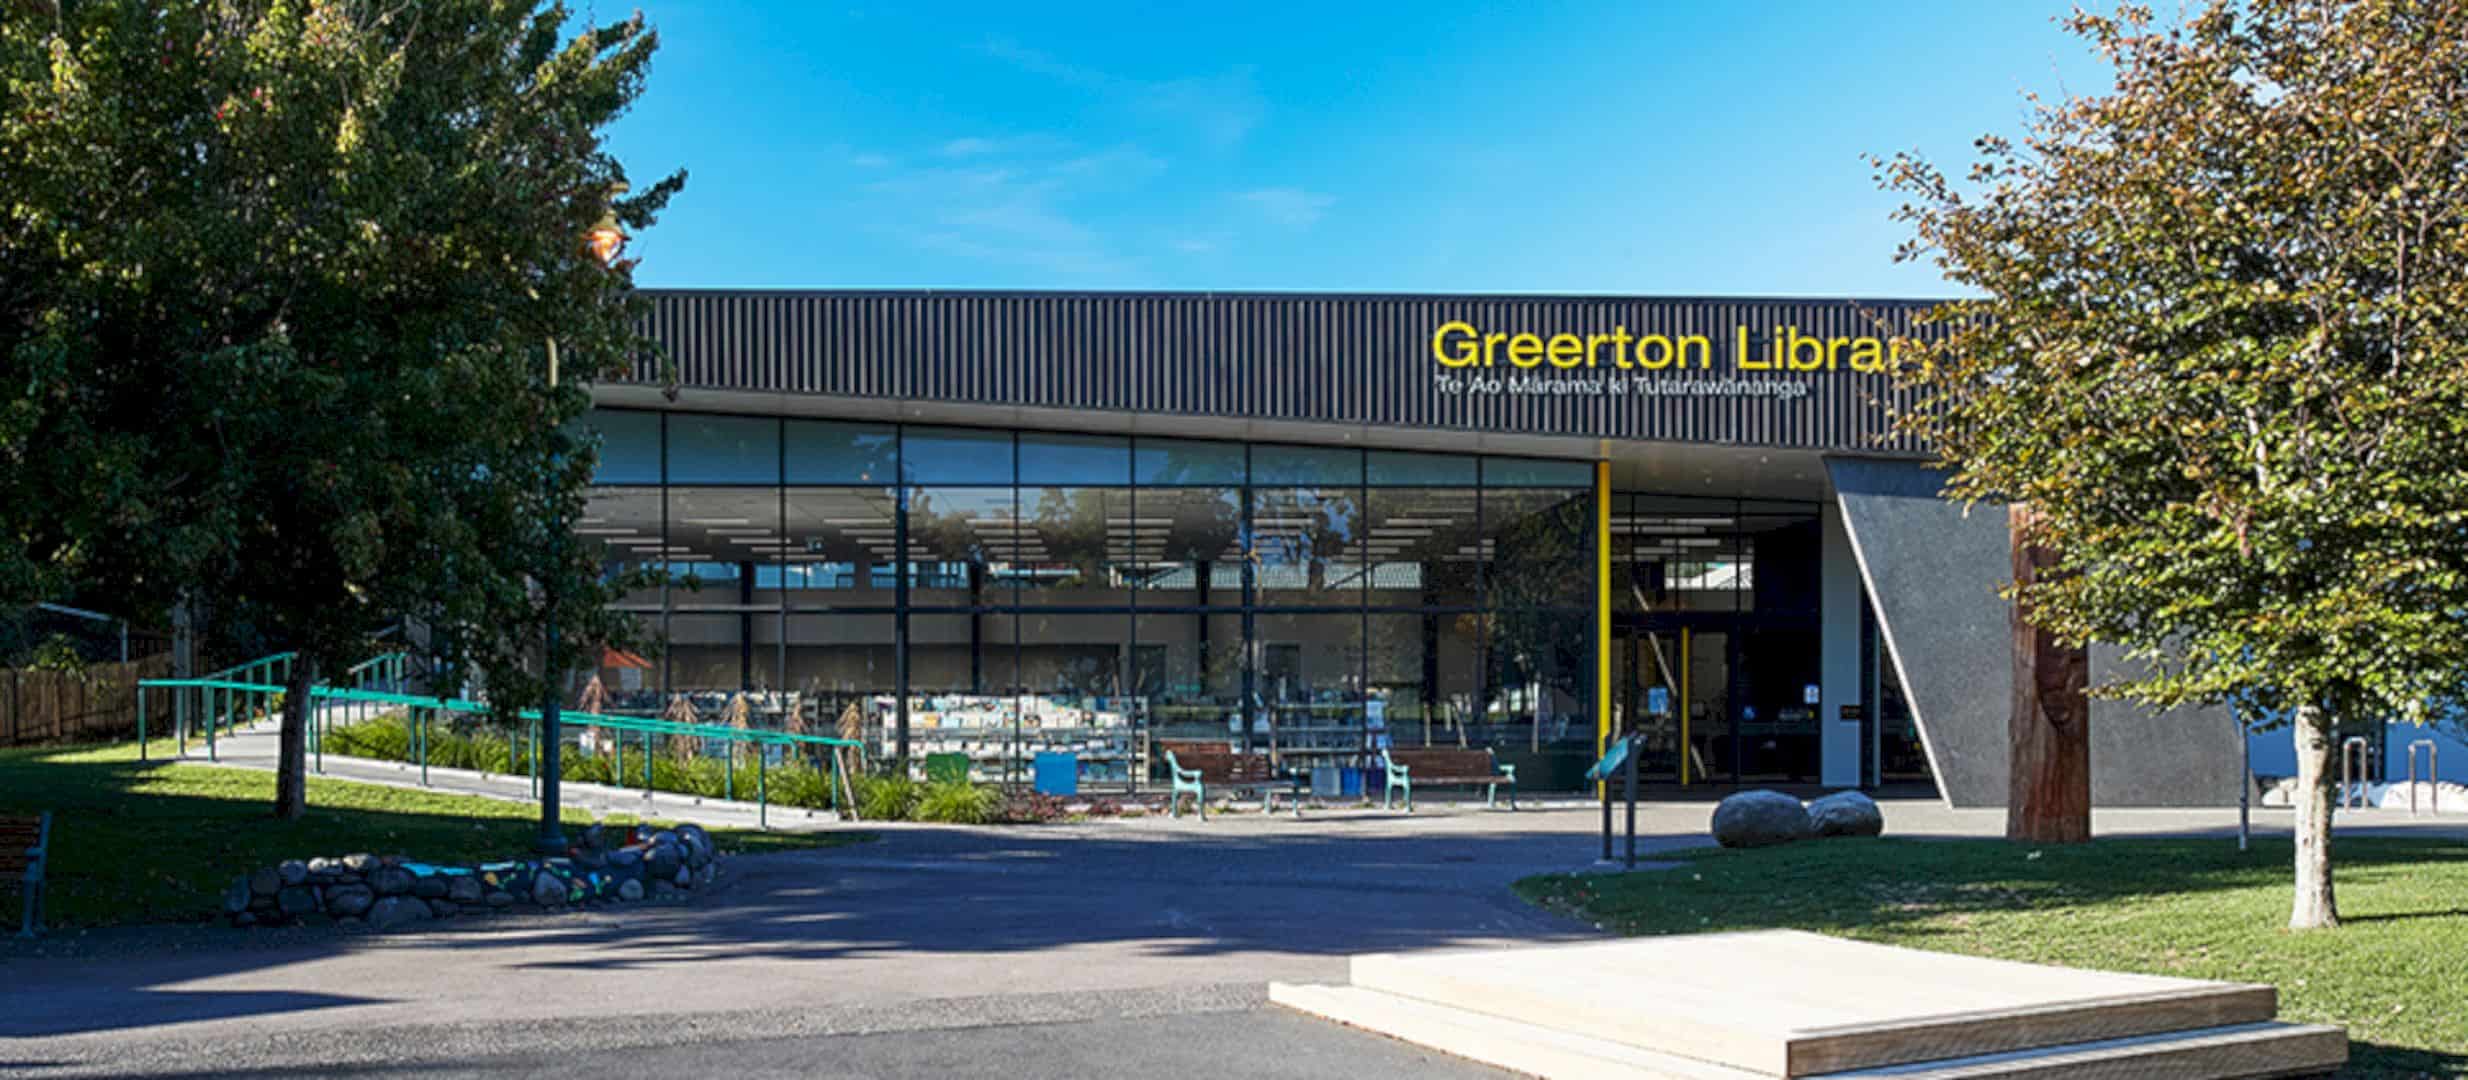 Greerton Library 3